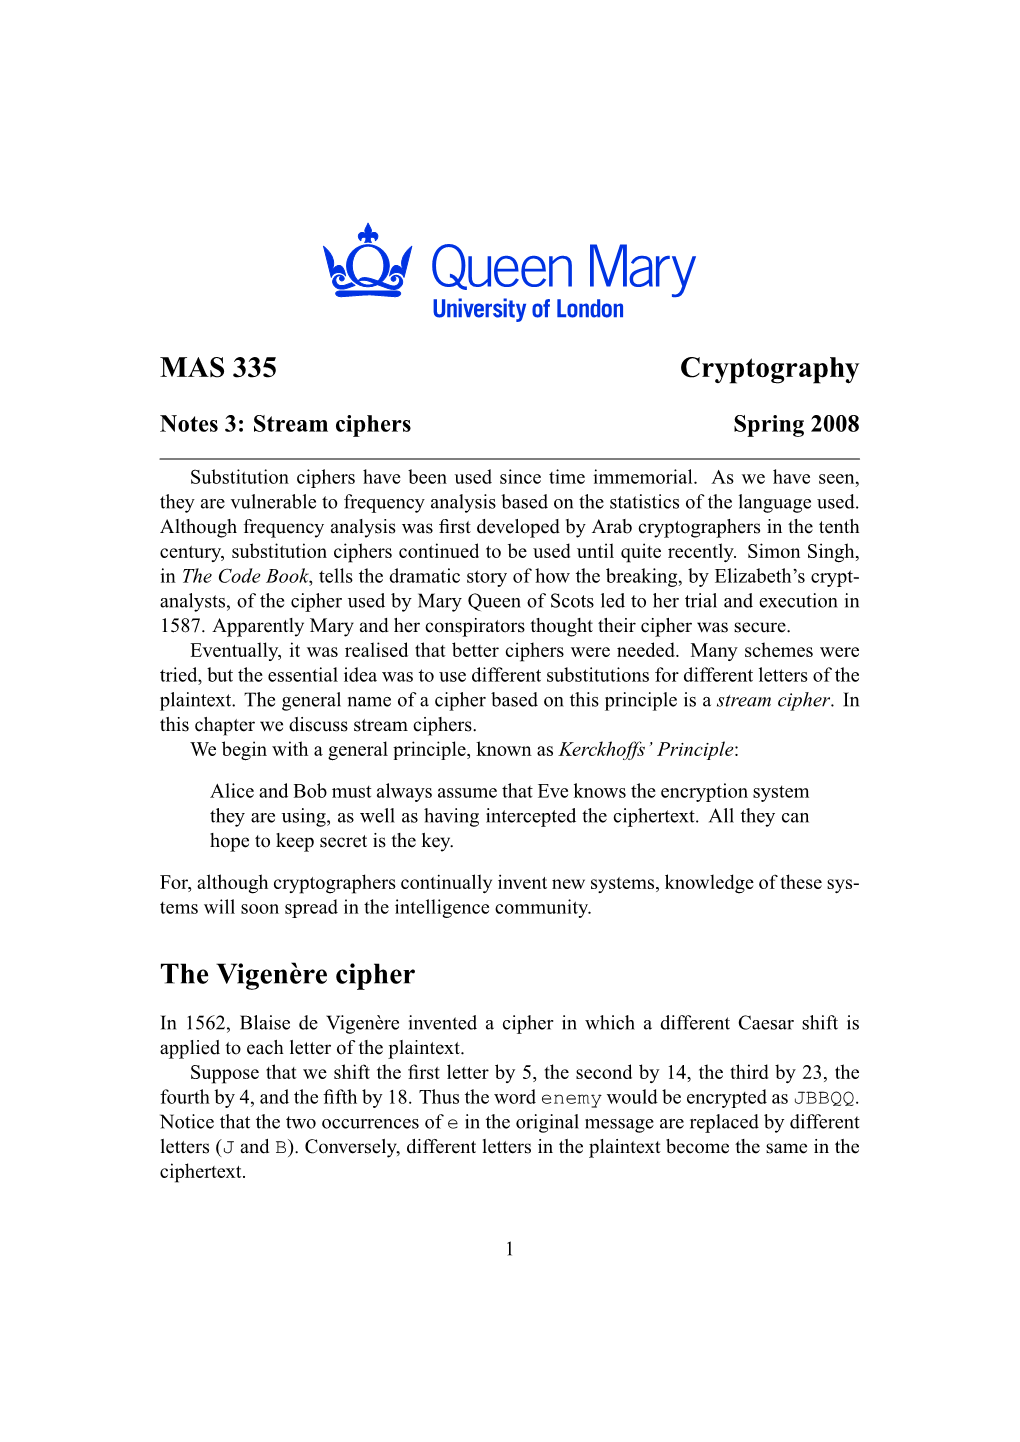 MAS 335 Cryptography the Vigen`Ere Cipher